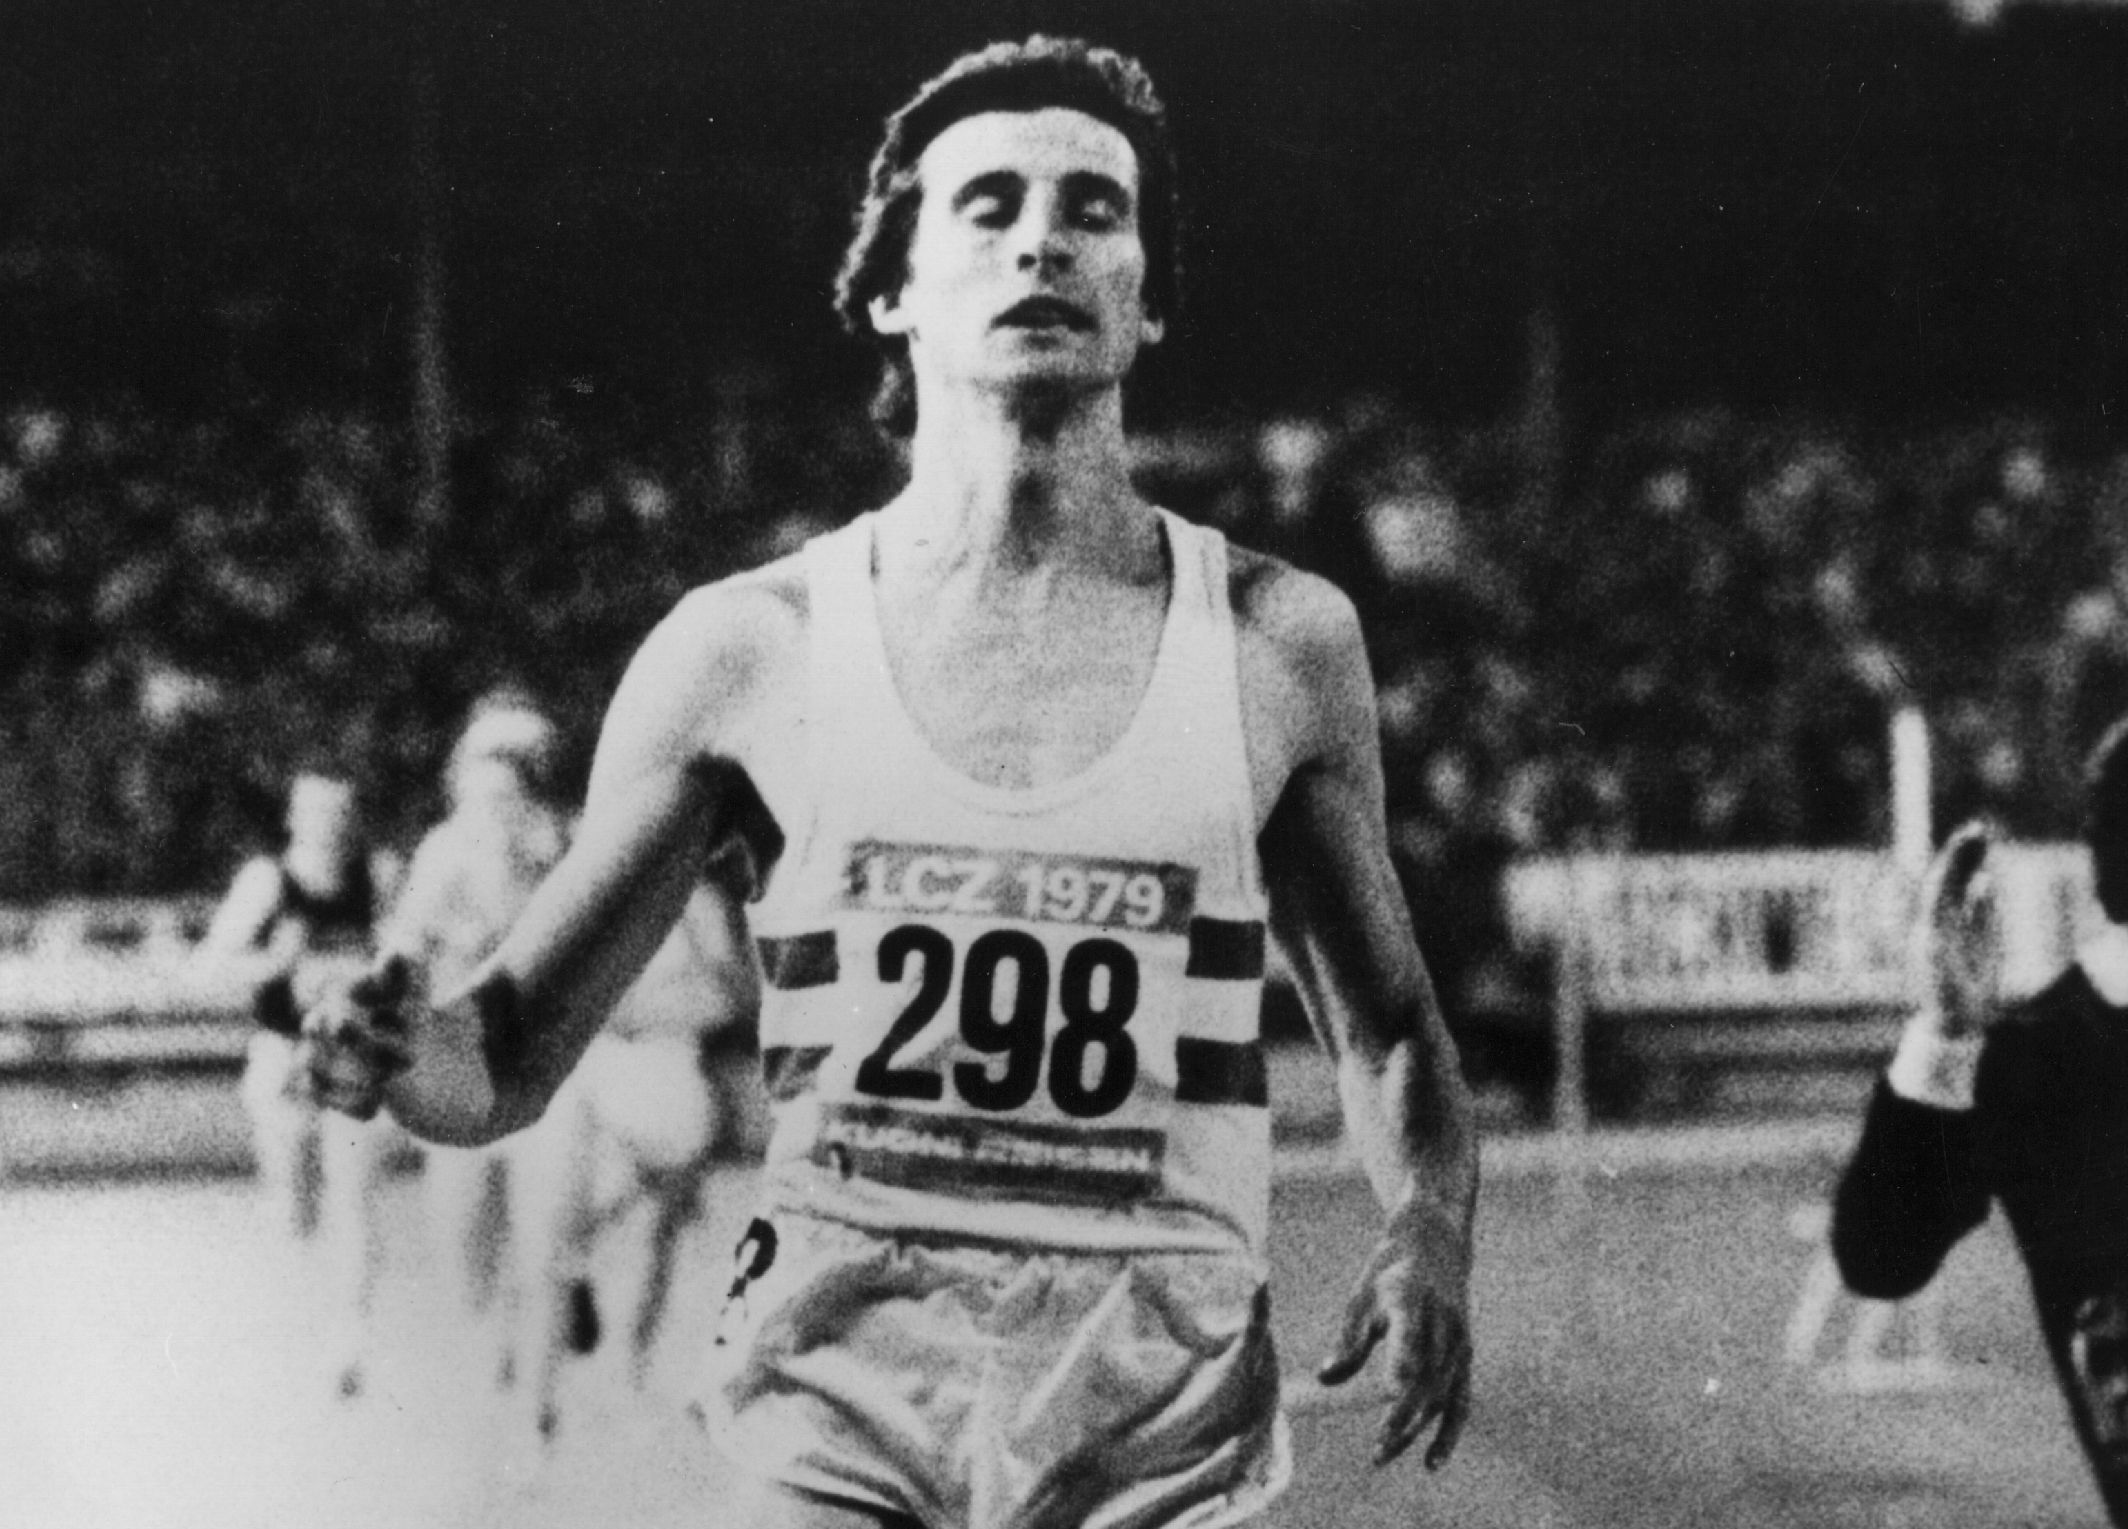 Seb Coe breaks the world 1500m record in Zurich in 1979